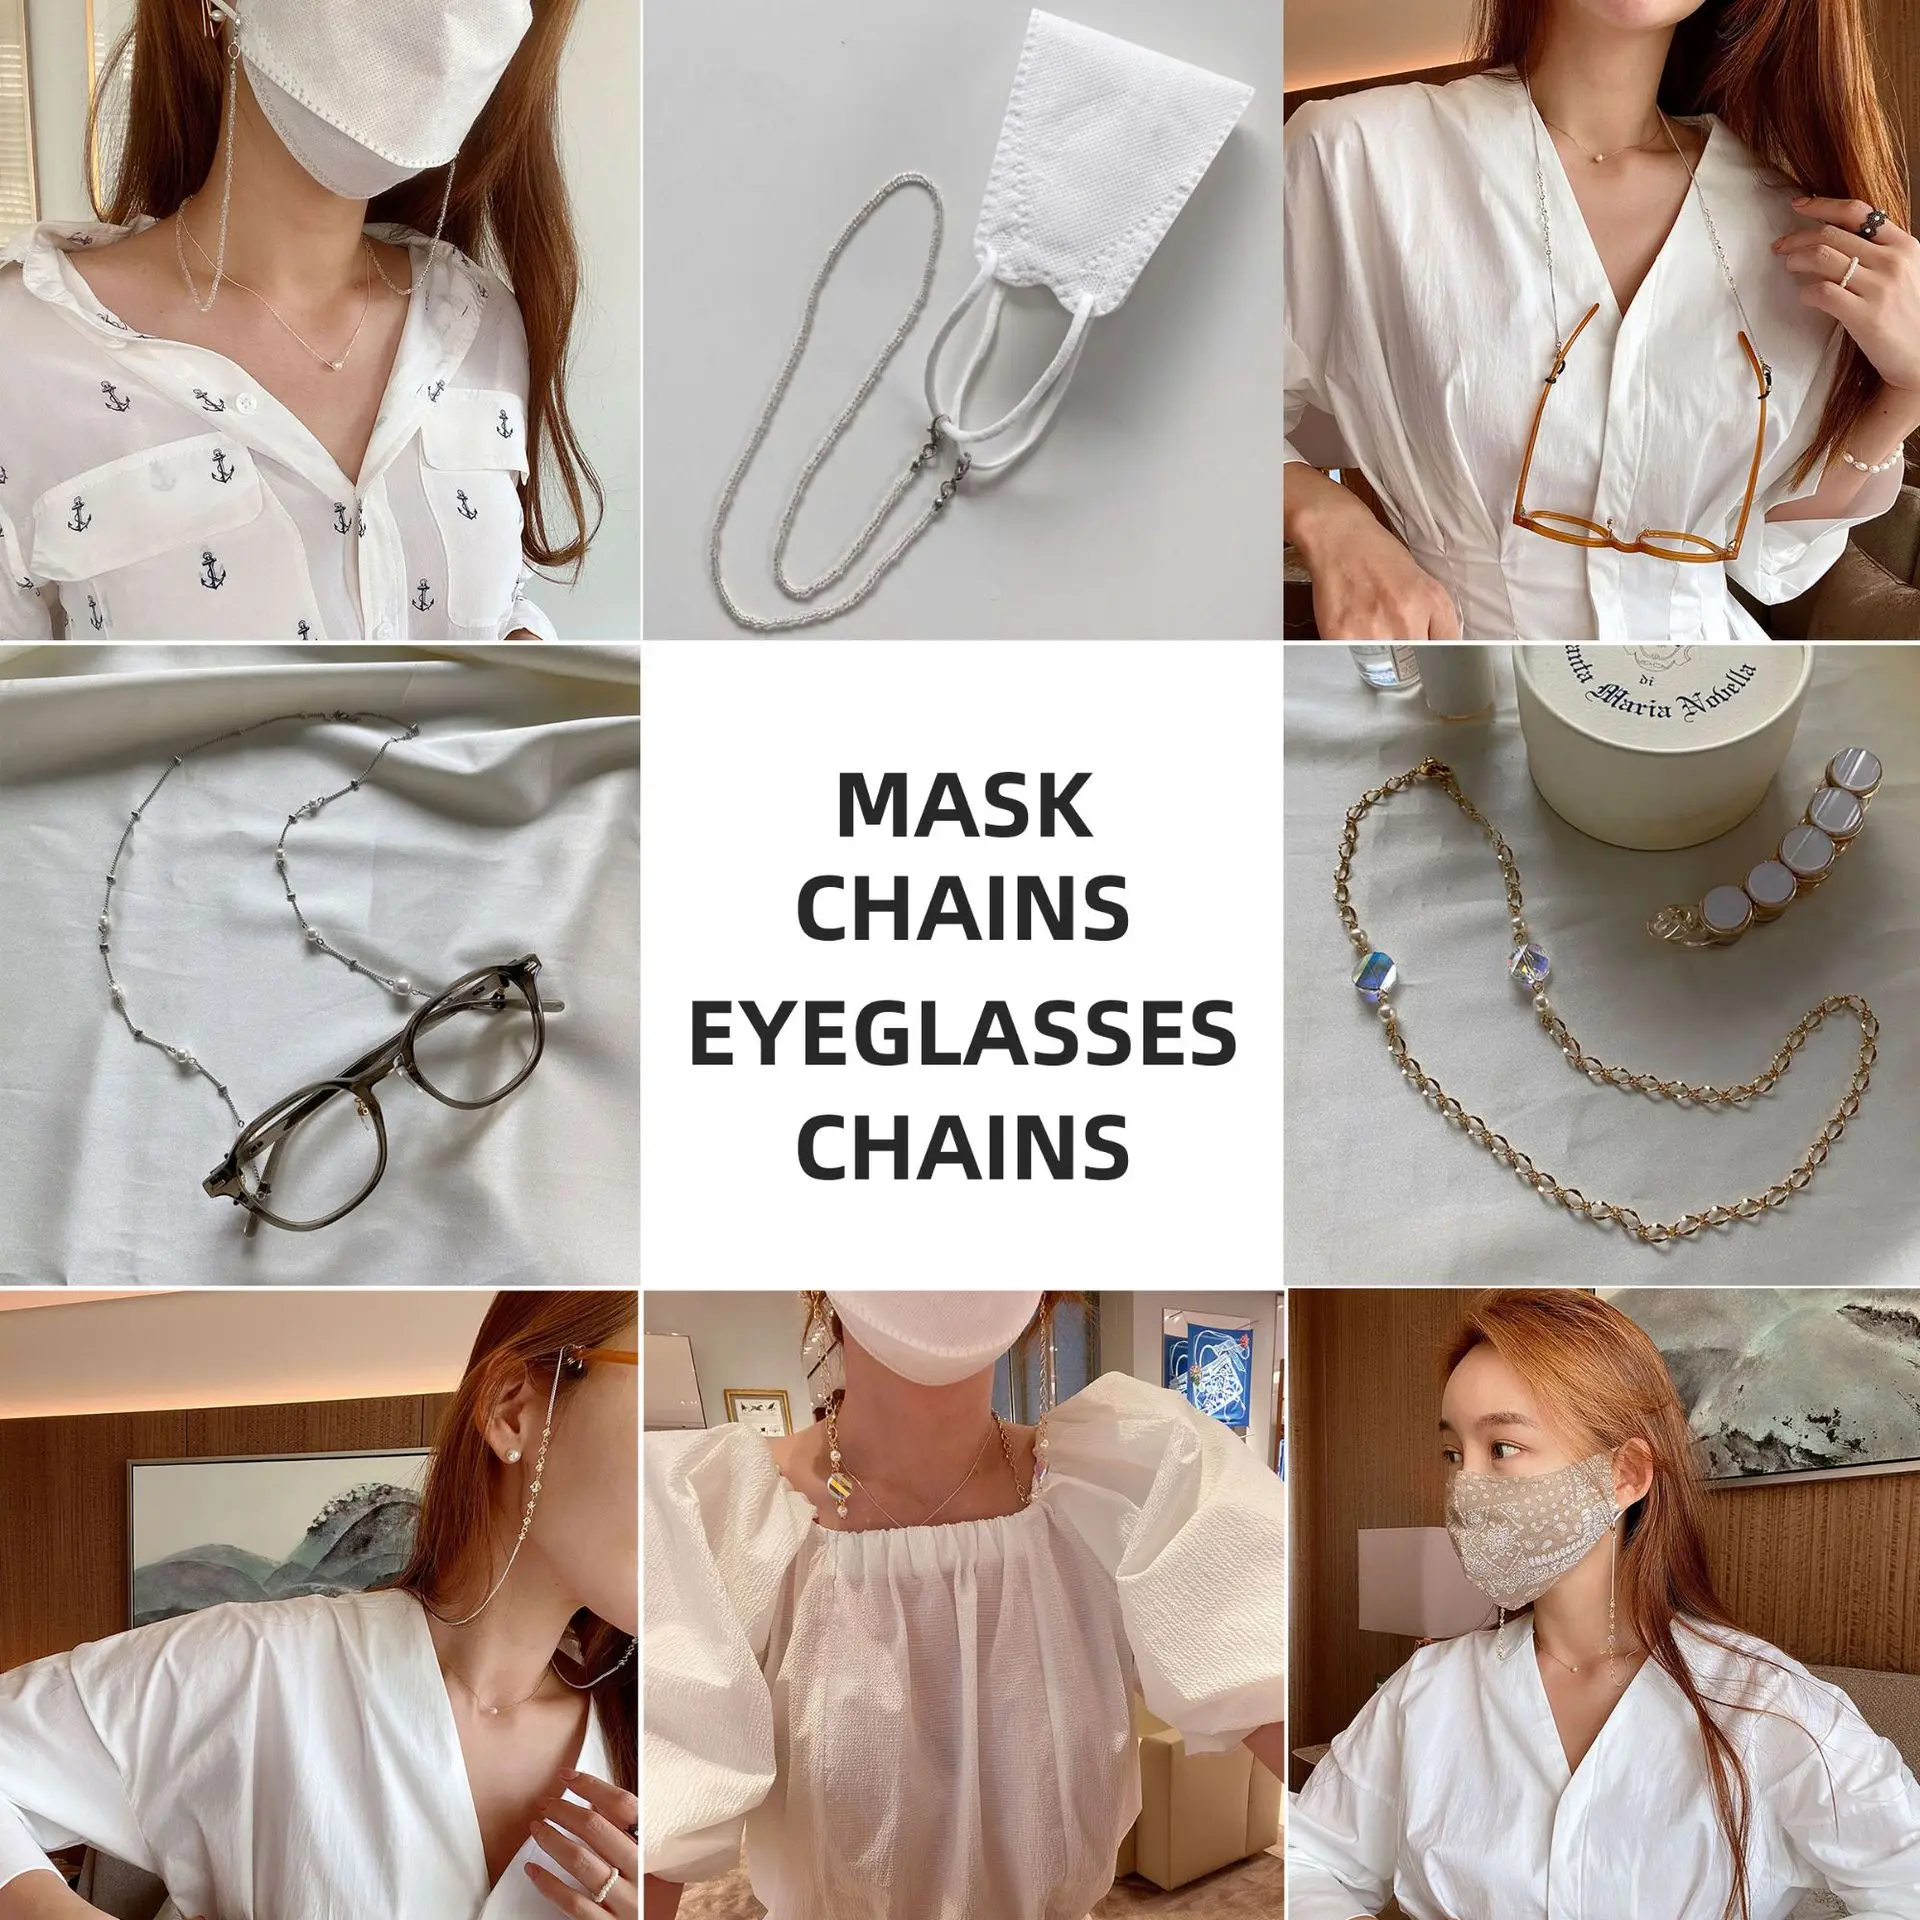 New Korean Vintage Crystal Heart Pendant Necklace Mask Chain Strap Hang on Neck Glasses Holder Rope for Women Girl